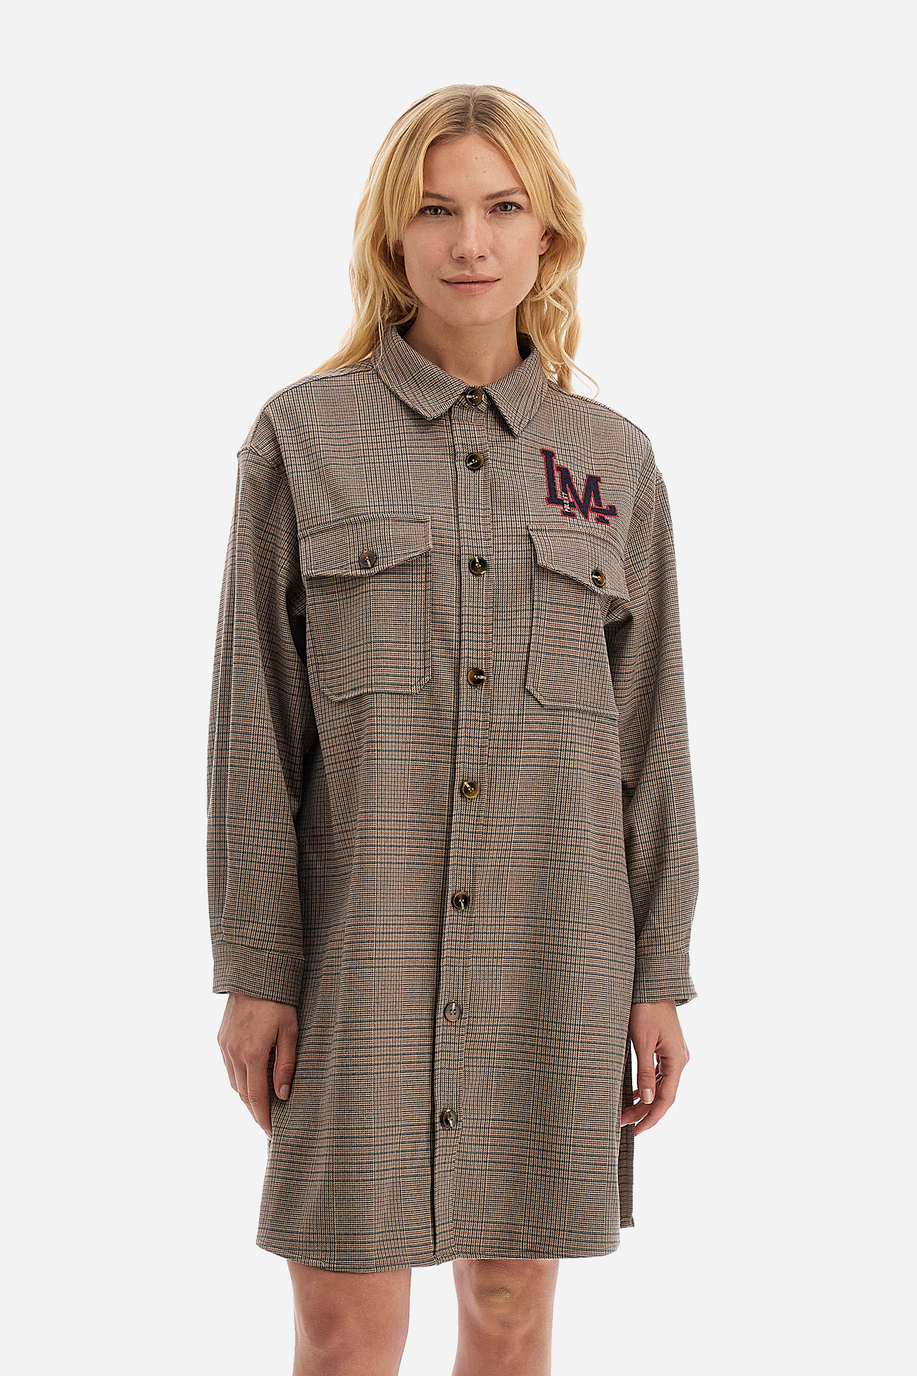 Women's jacket in an oversized fit - Wanette - Outerwear | La Martina - Official Online Shop